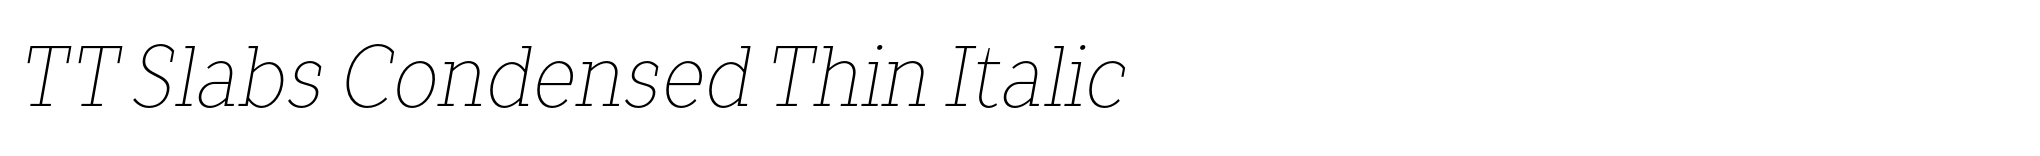 TT Slabs Condensed Thin Italic image